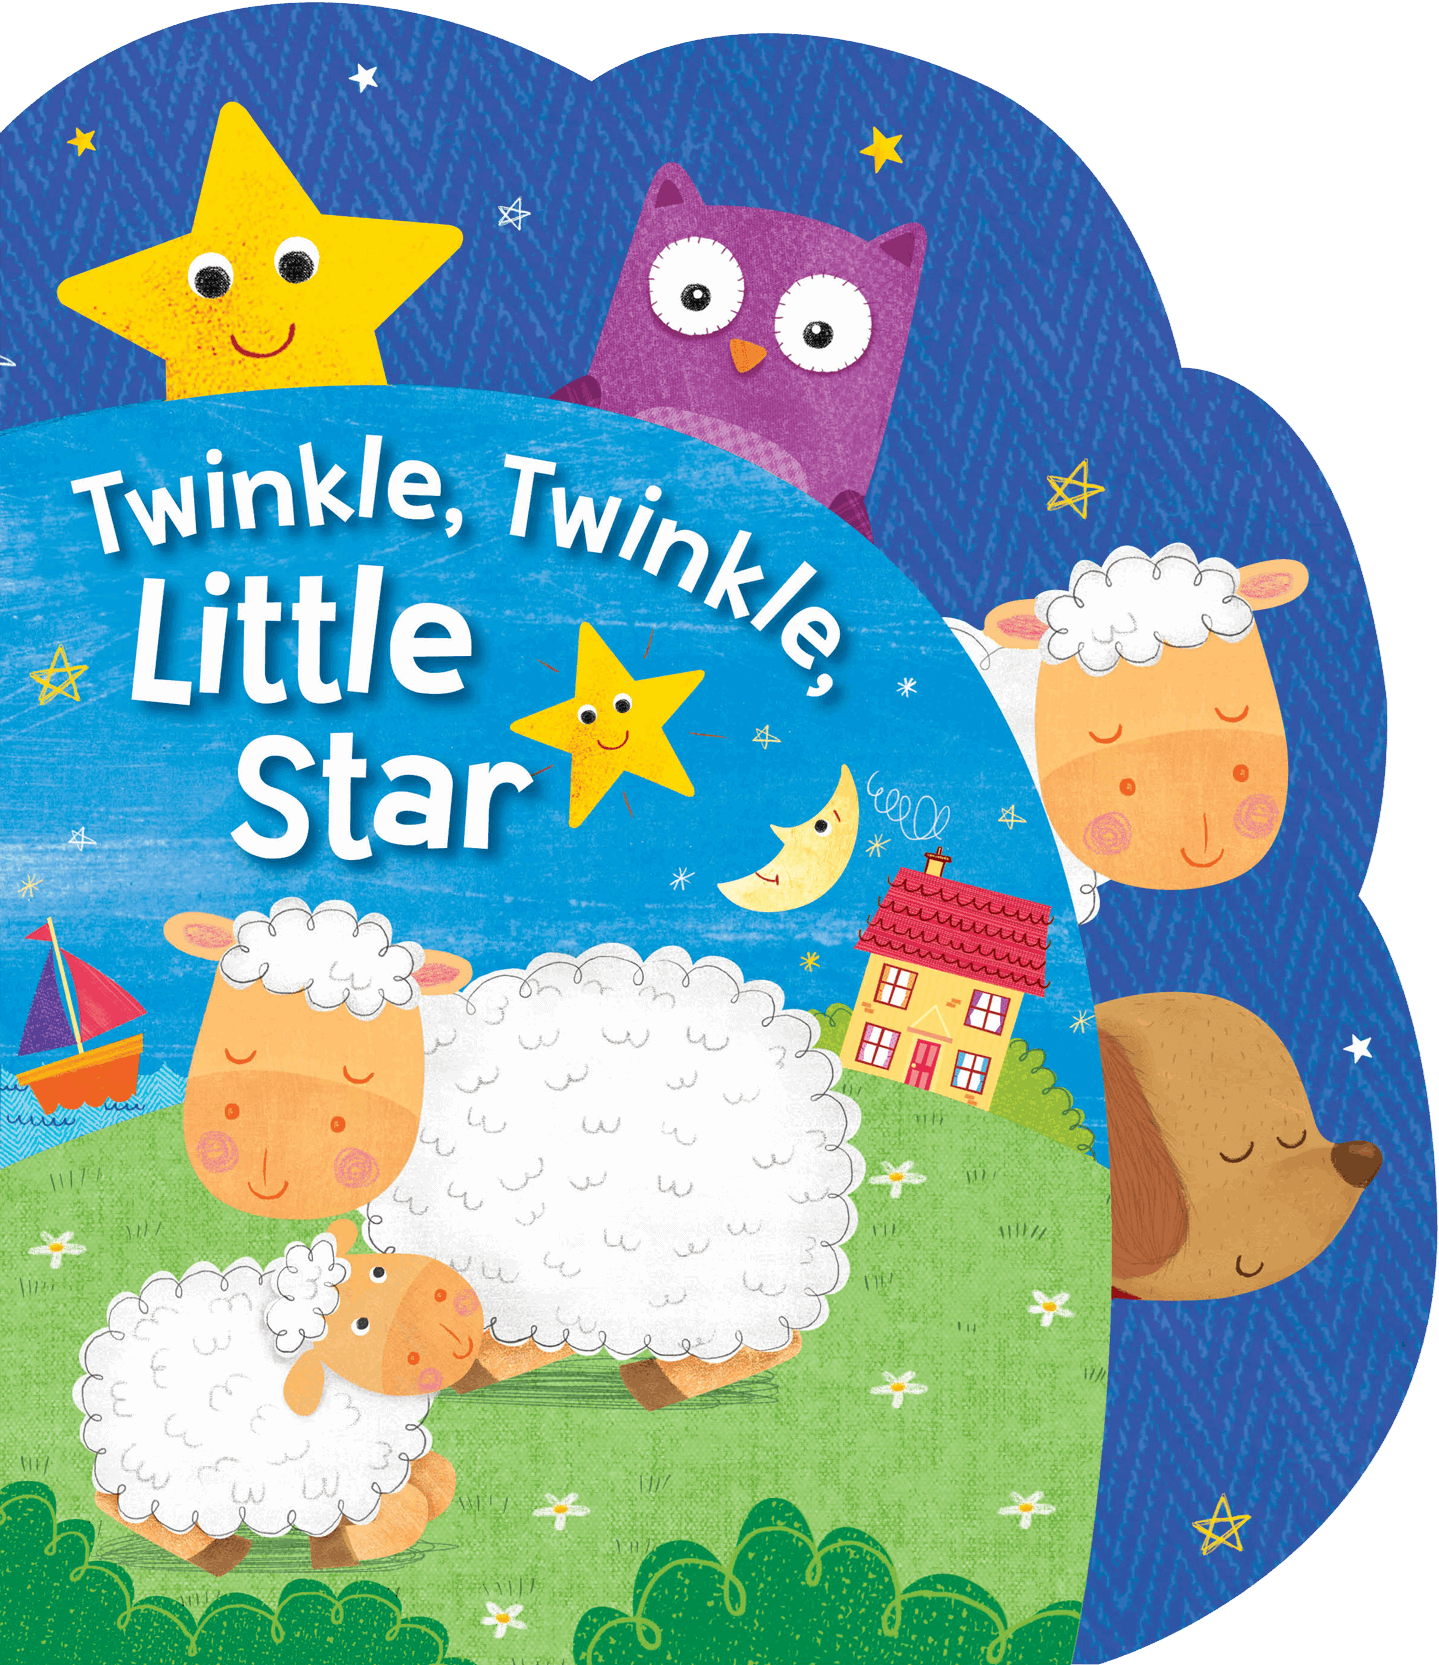 who wrote twinkle twinkle little star